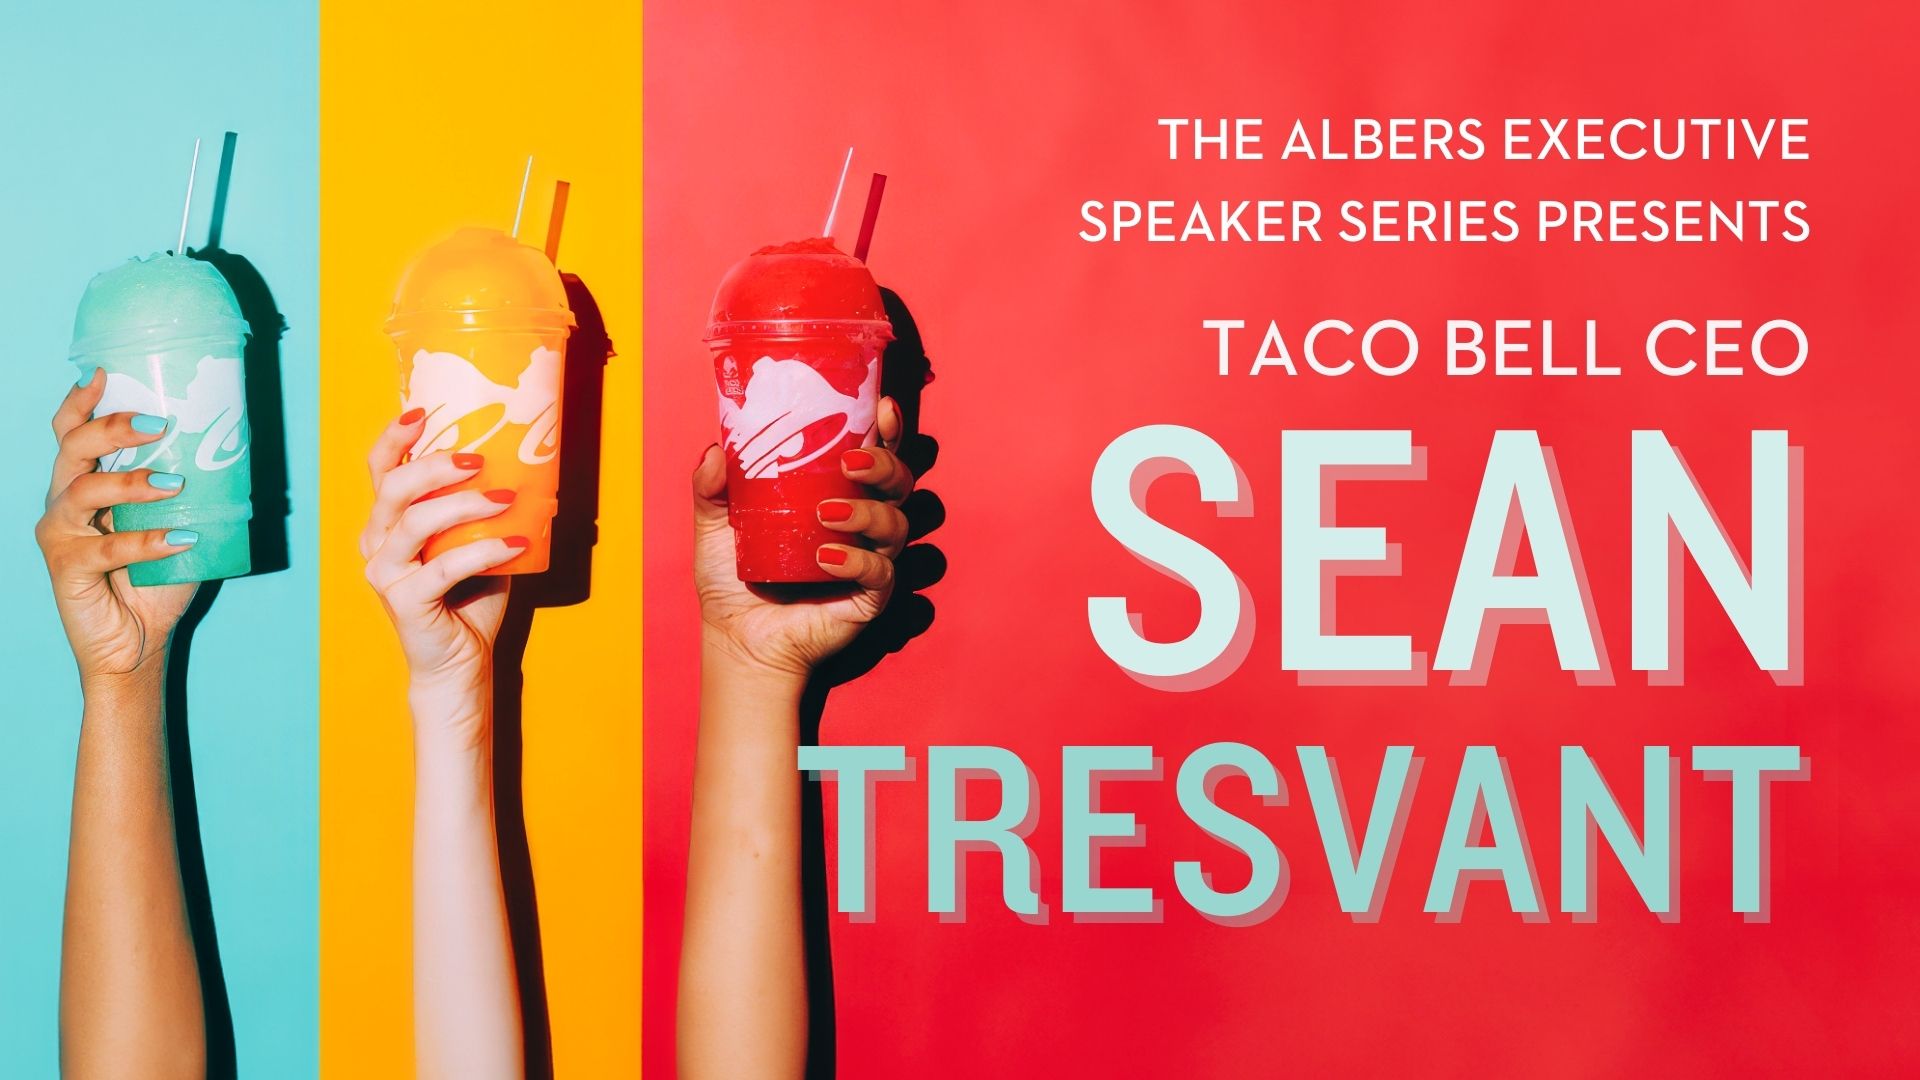 Taco Bell CEO Sean Tresvant to Speak at Albers Feb 8